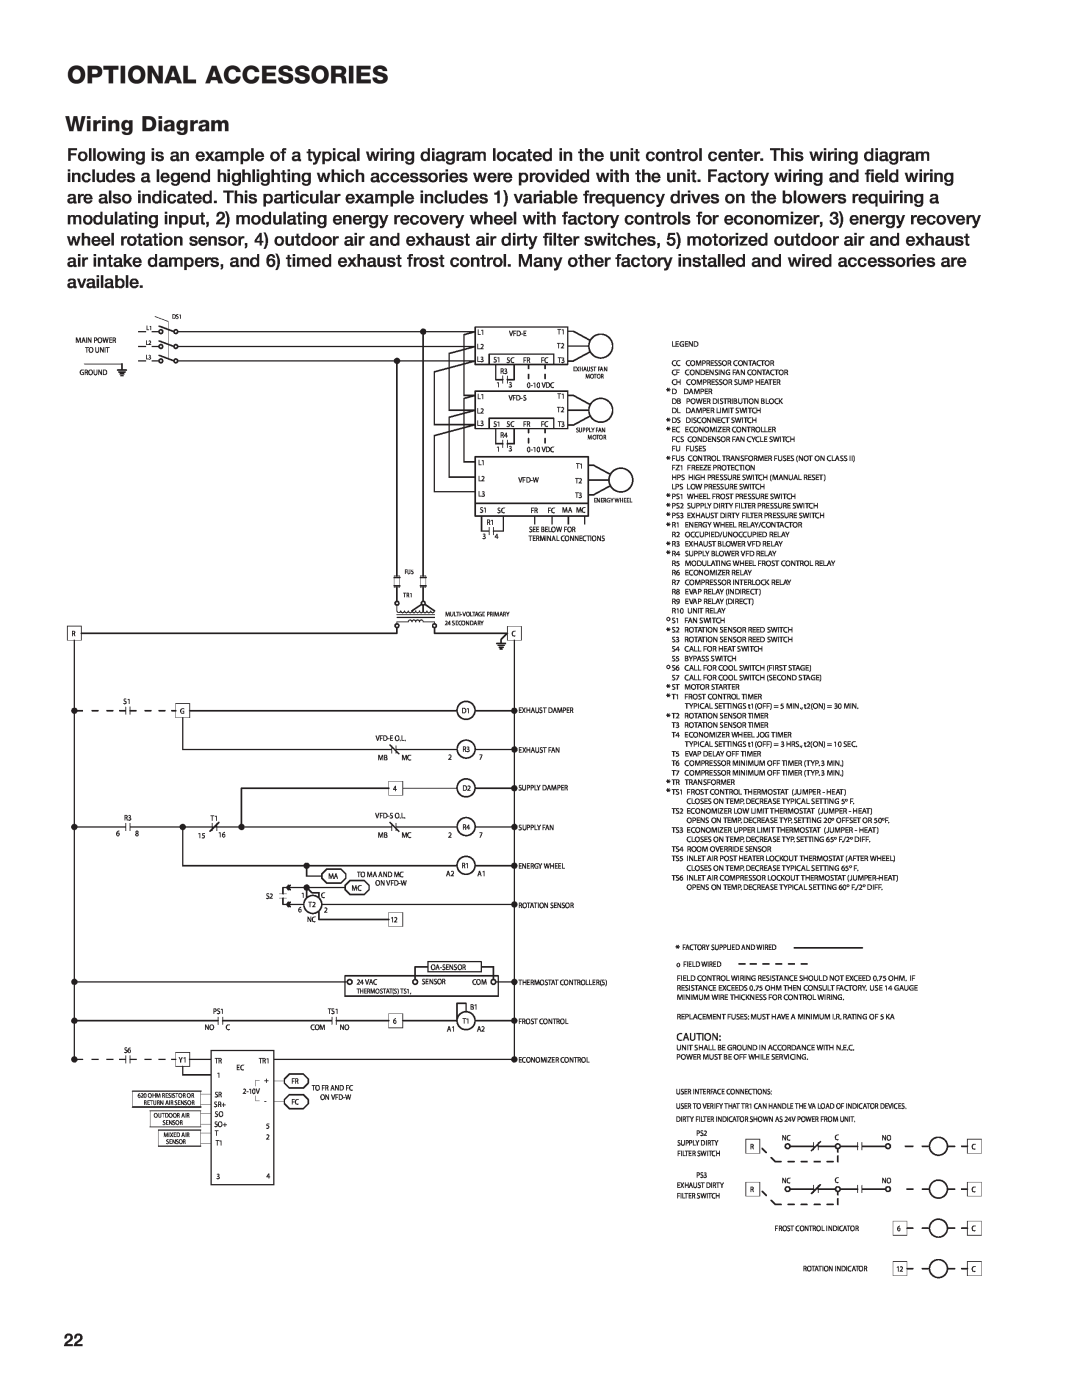 Greenheck Fan 55, HRE-20, 90, 45 manual Wiring Diagram, optional accessories 